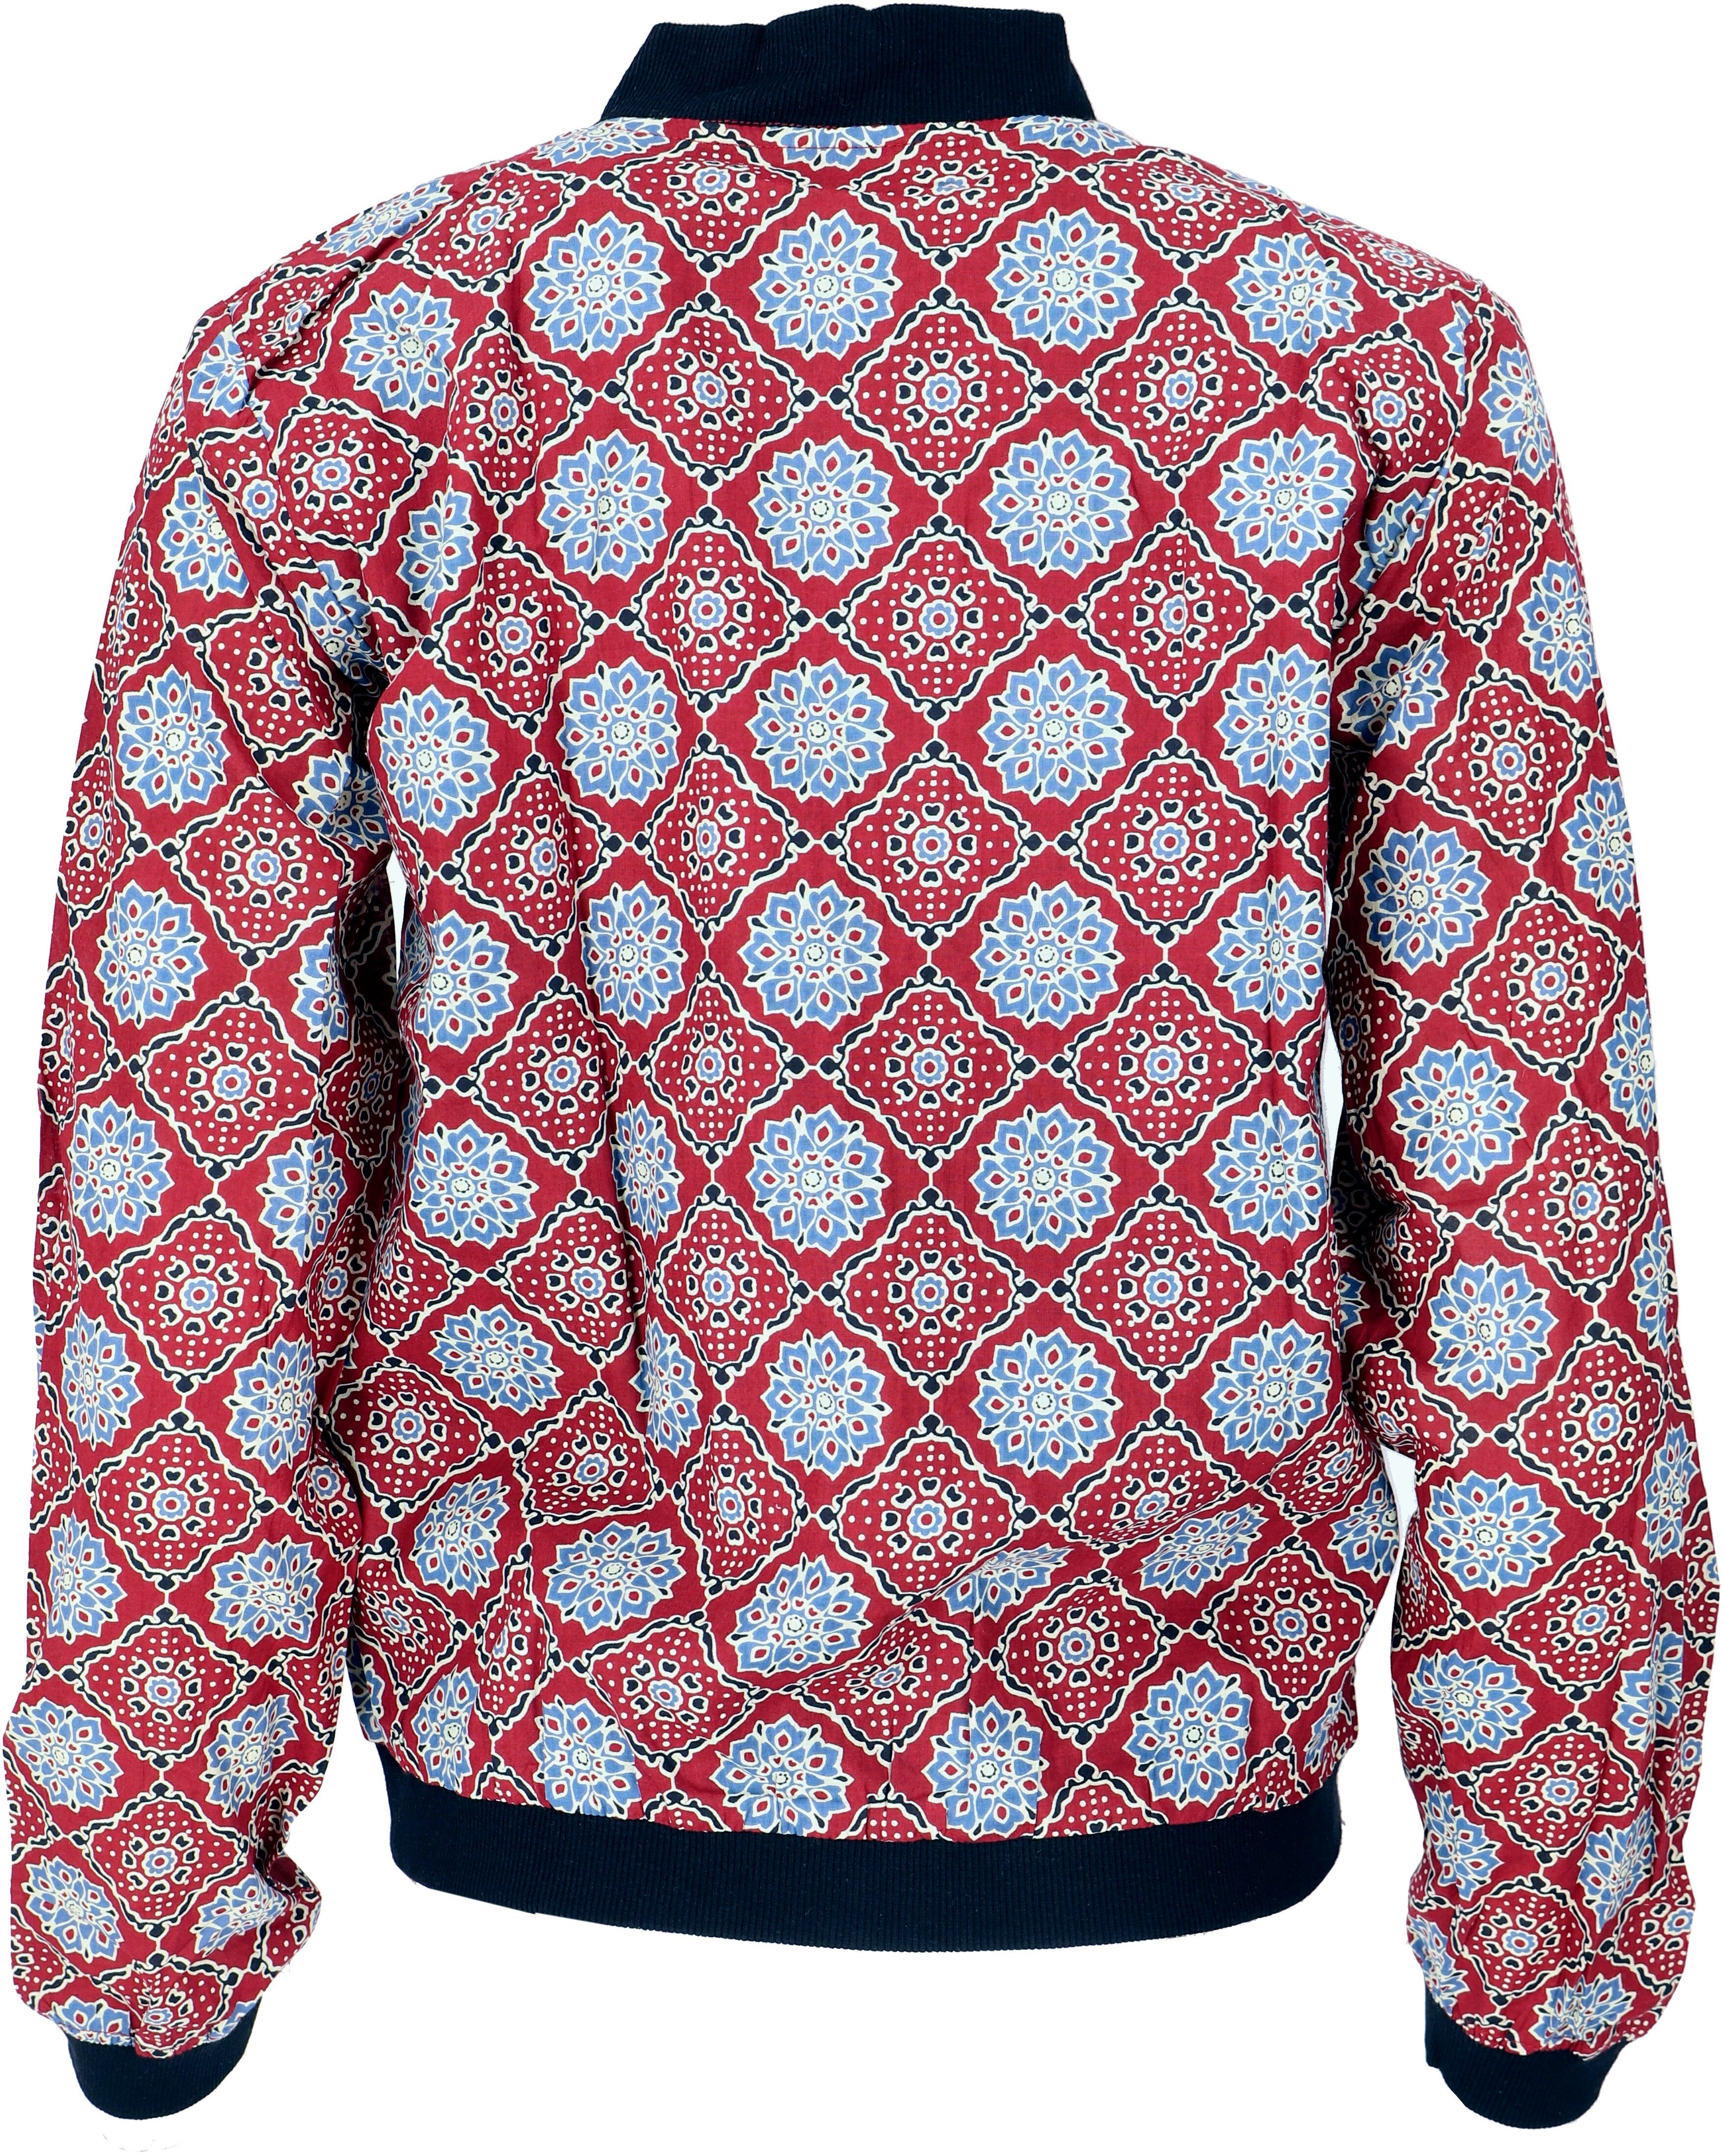 Guru-Shop Langjacke Boho Style rot/blau - Baumwolle Bomberjacke aus